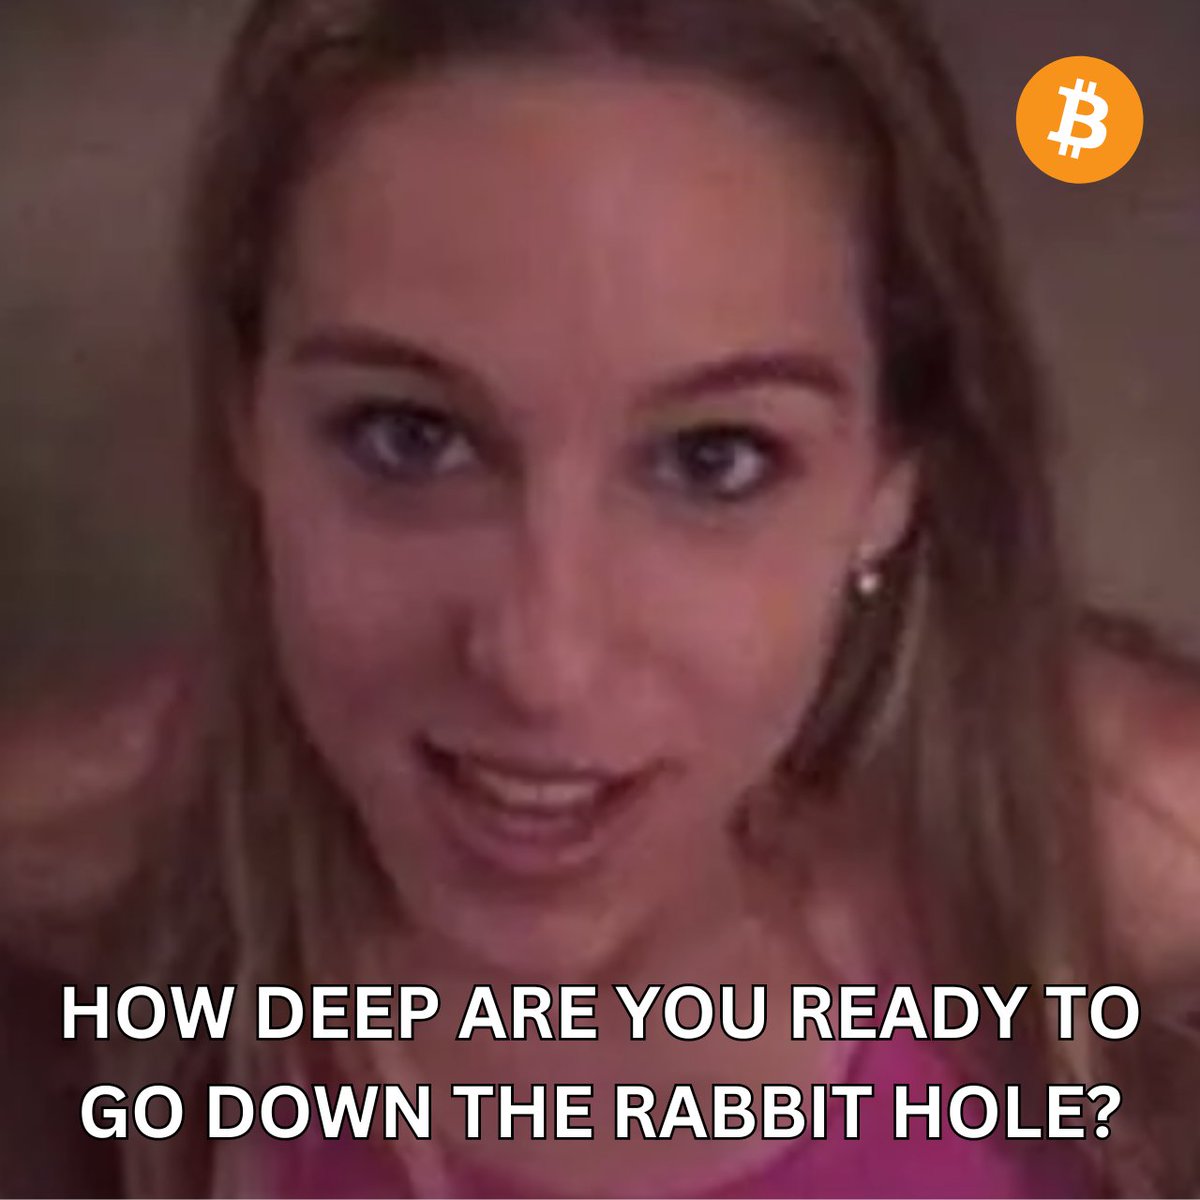 How DEEP are you ready to go down the rabbit hole?

#Bitcoin #BTC #HODL #StackSats #OptOut #RabbitHole #Heather